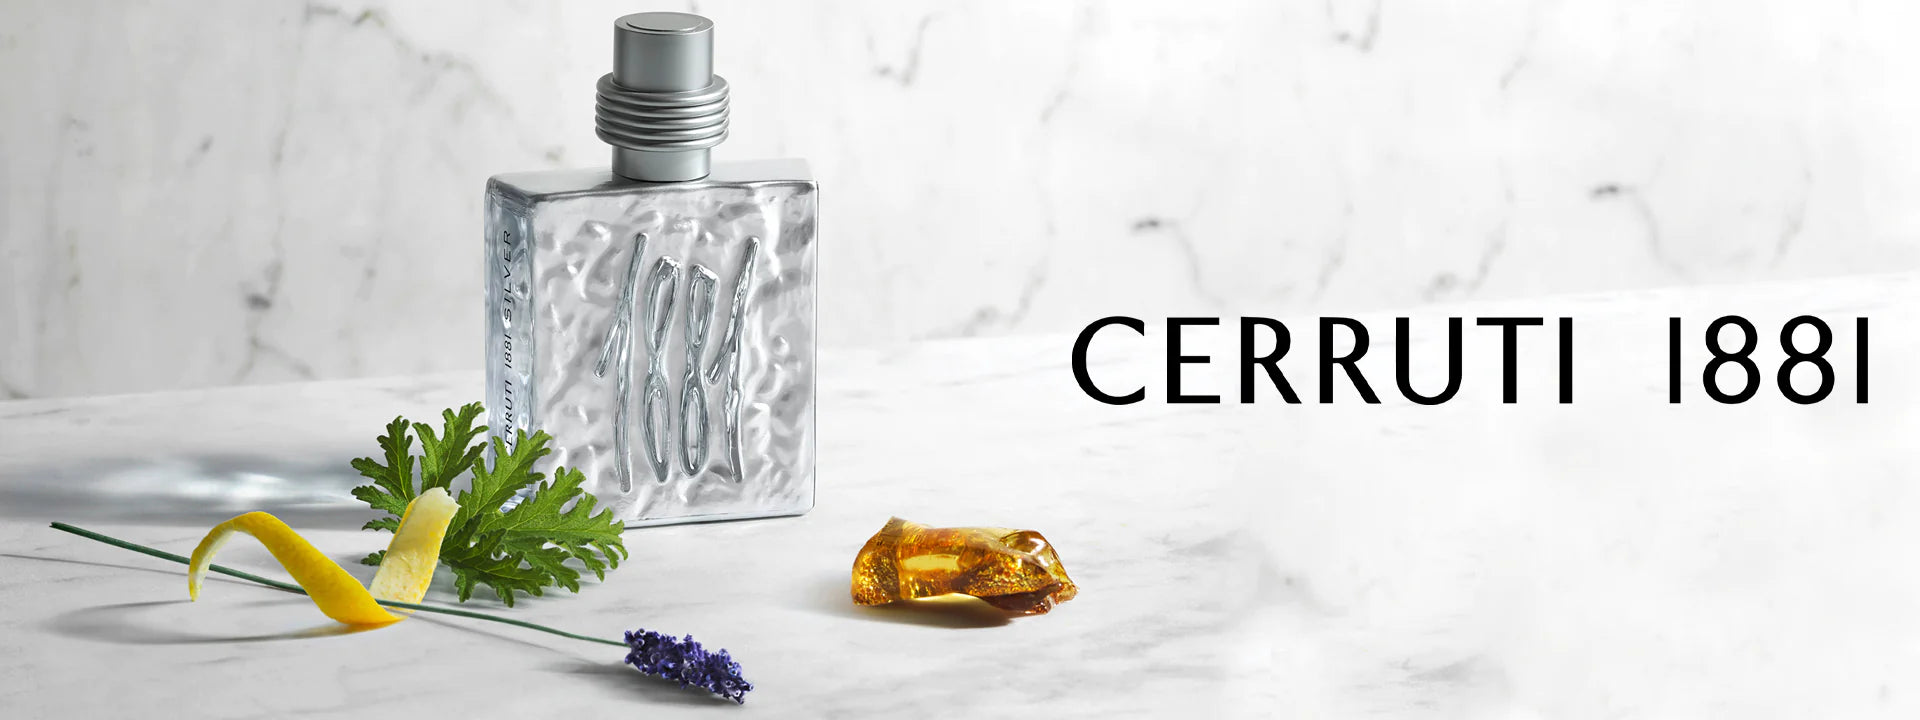 Cerruti perfume collection